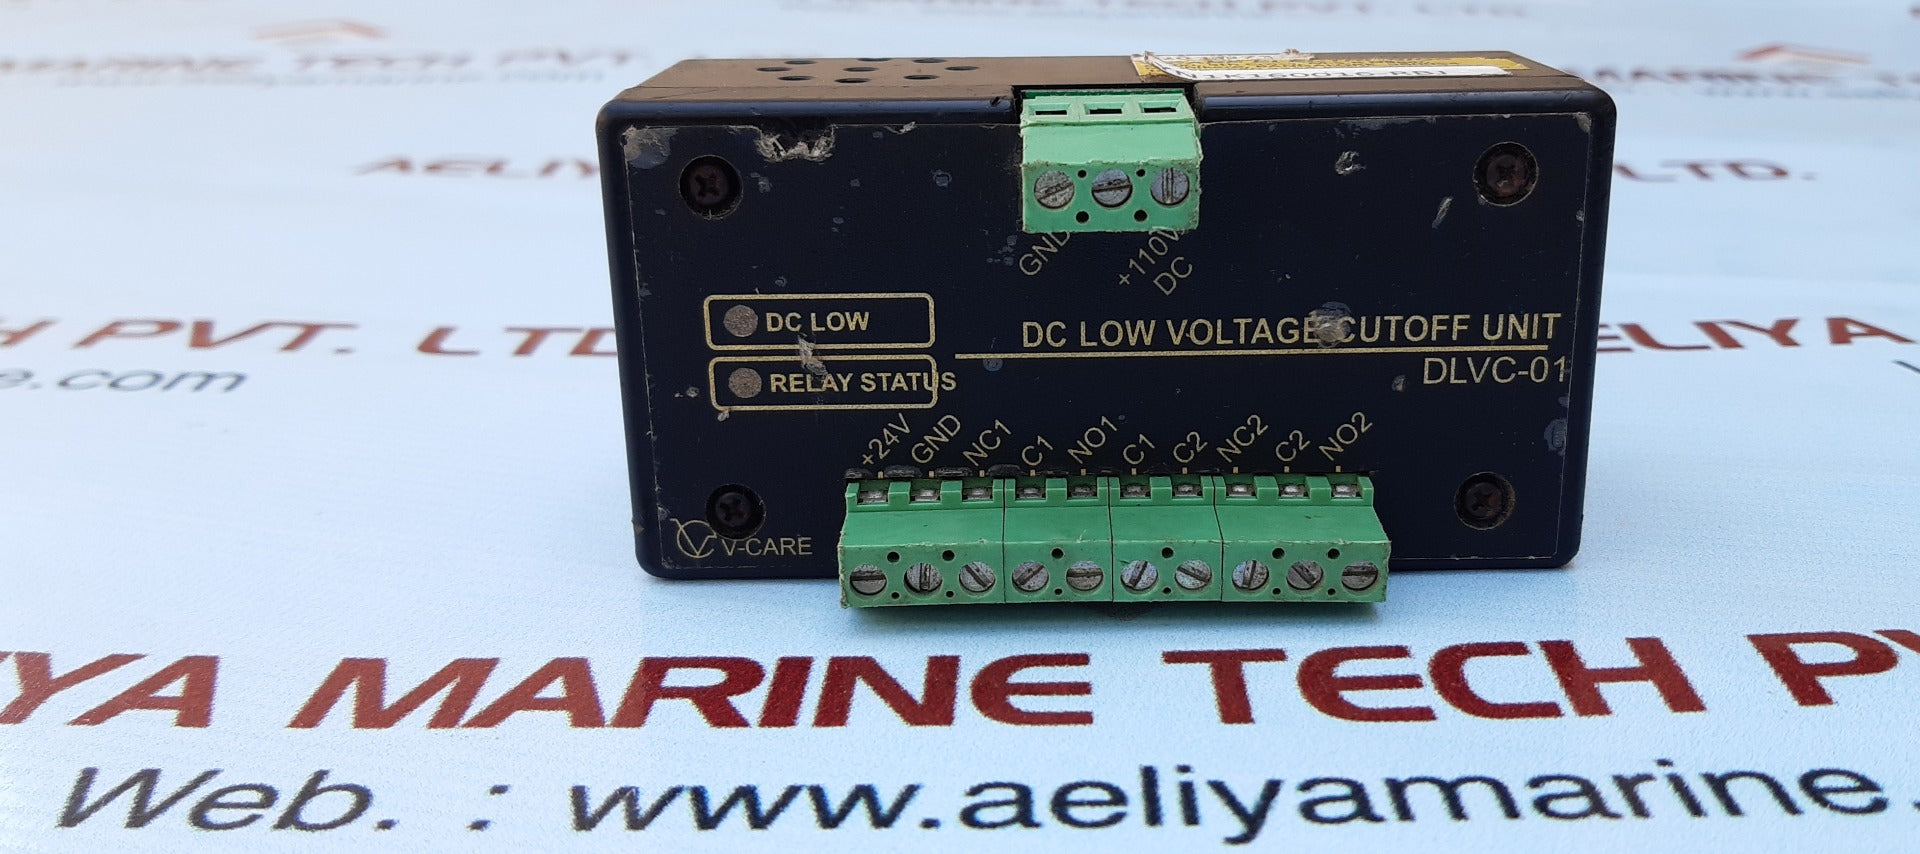 V-care dlvc-01 dc low voltage cutoff unit